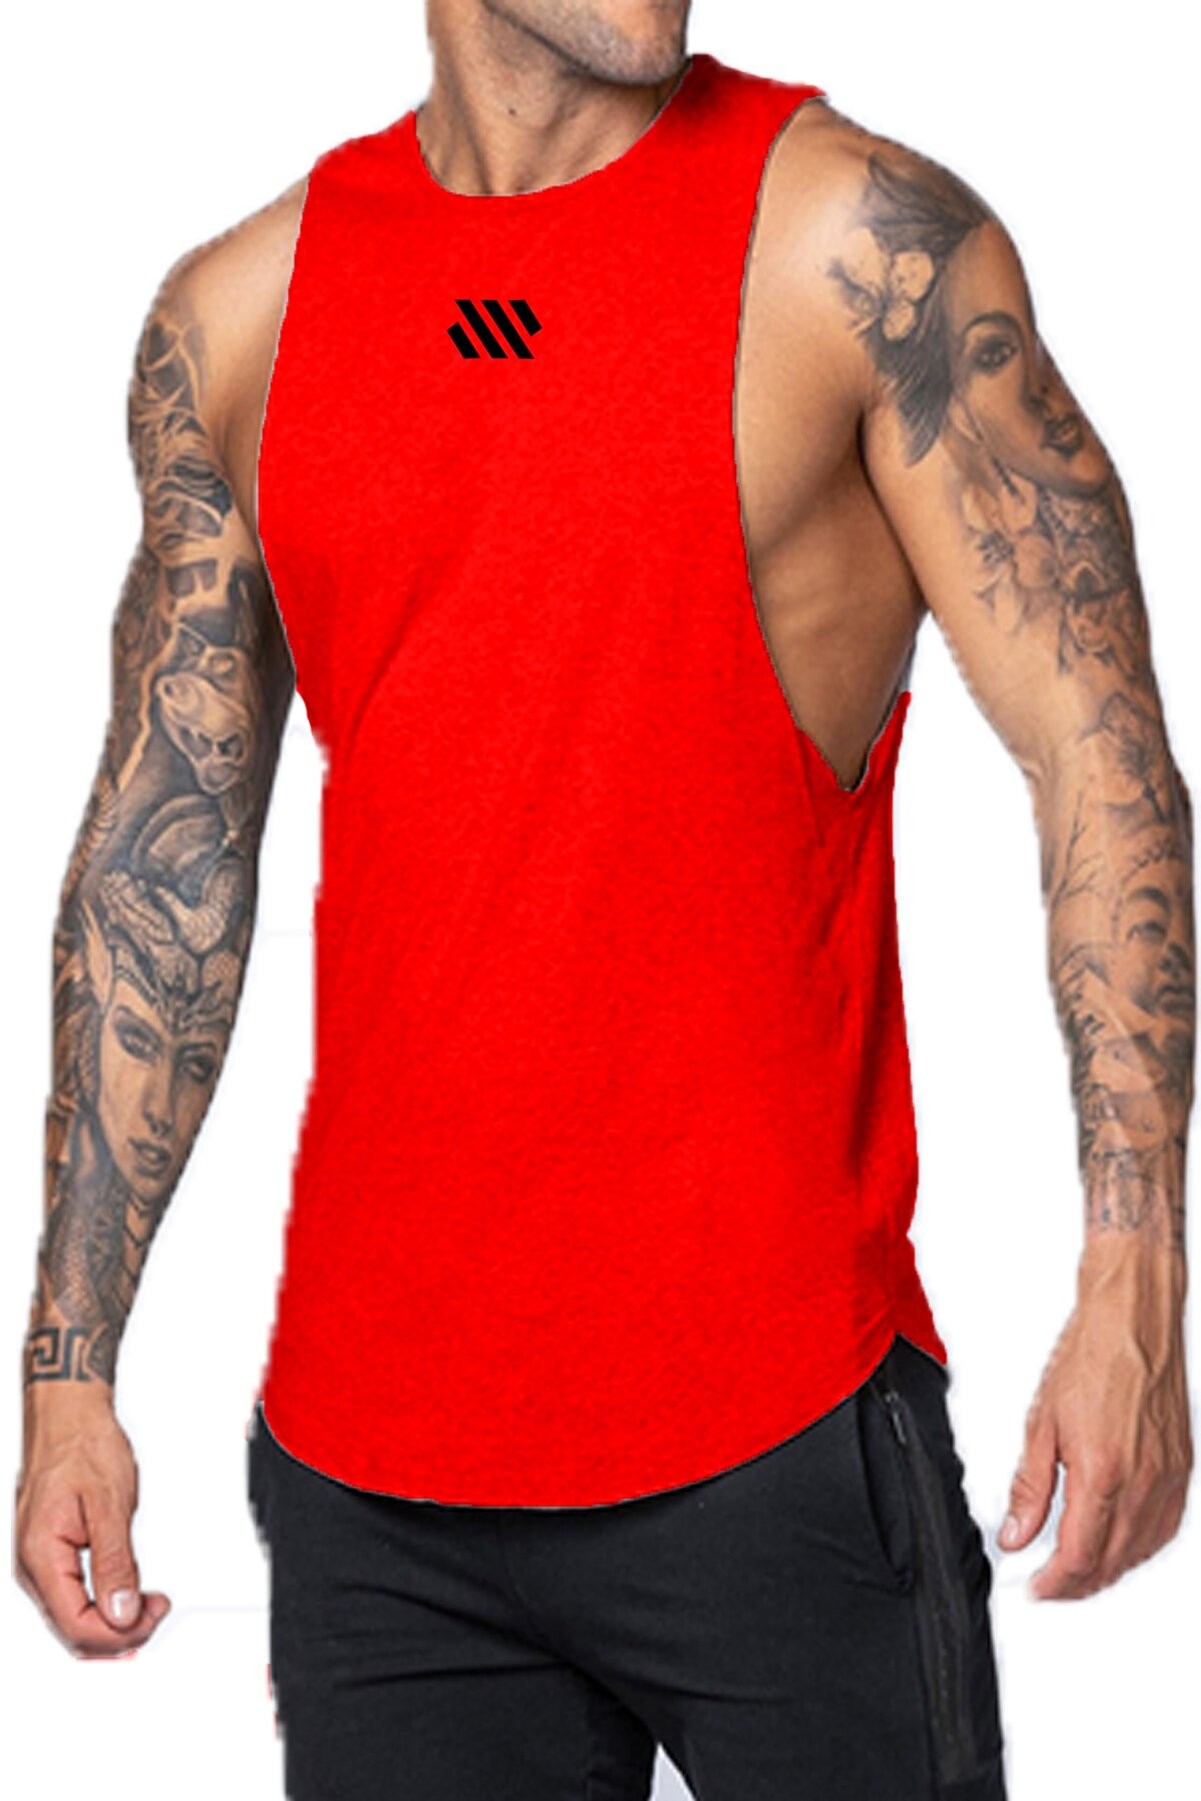 Ghassy Co. Erkek Dry Fit Gym Workout Stringer Fitness Spor Atlet Tshirt GYM-105 - KIRMIZI